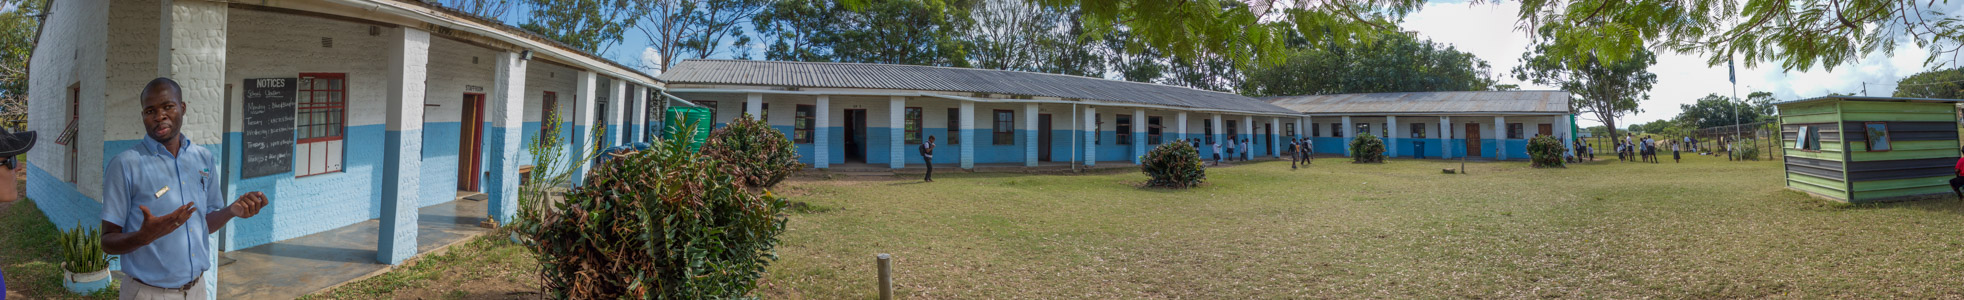 Mabibi Primary School - 6/2016